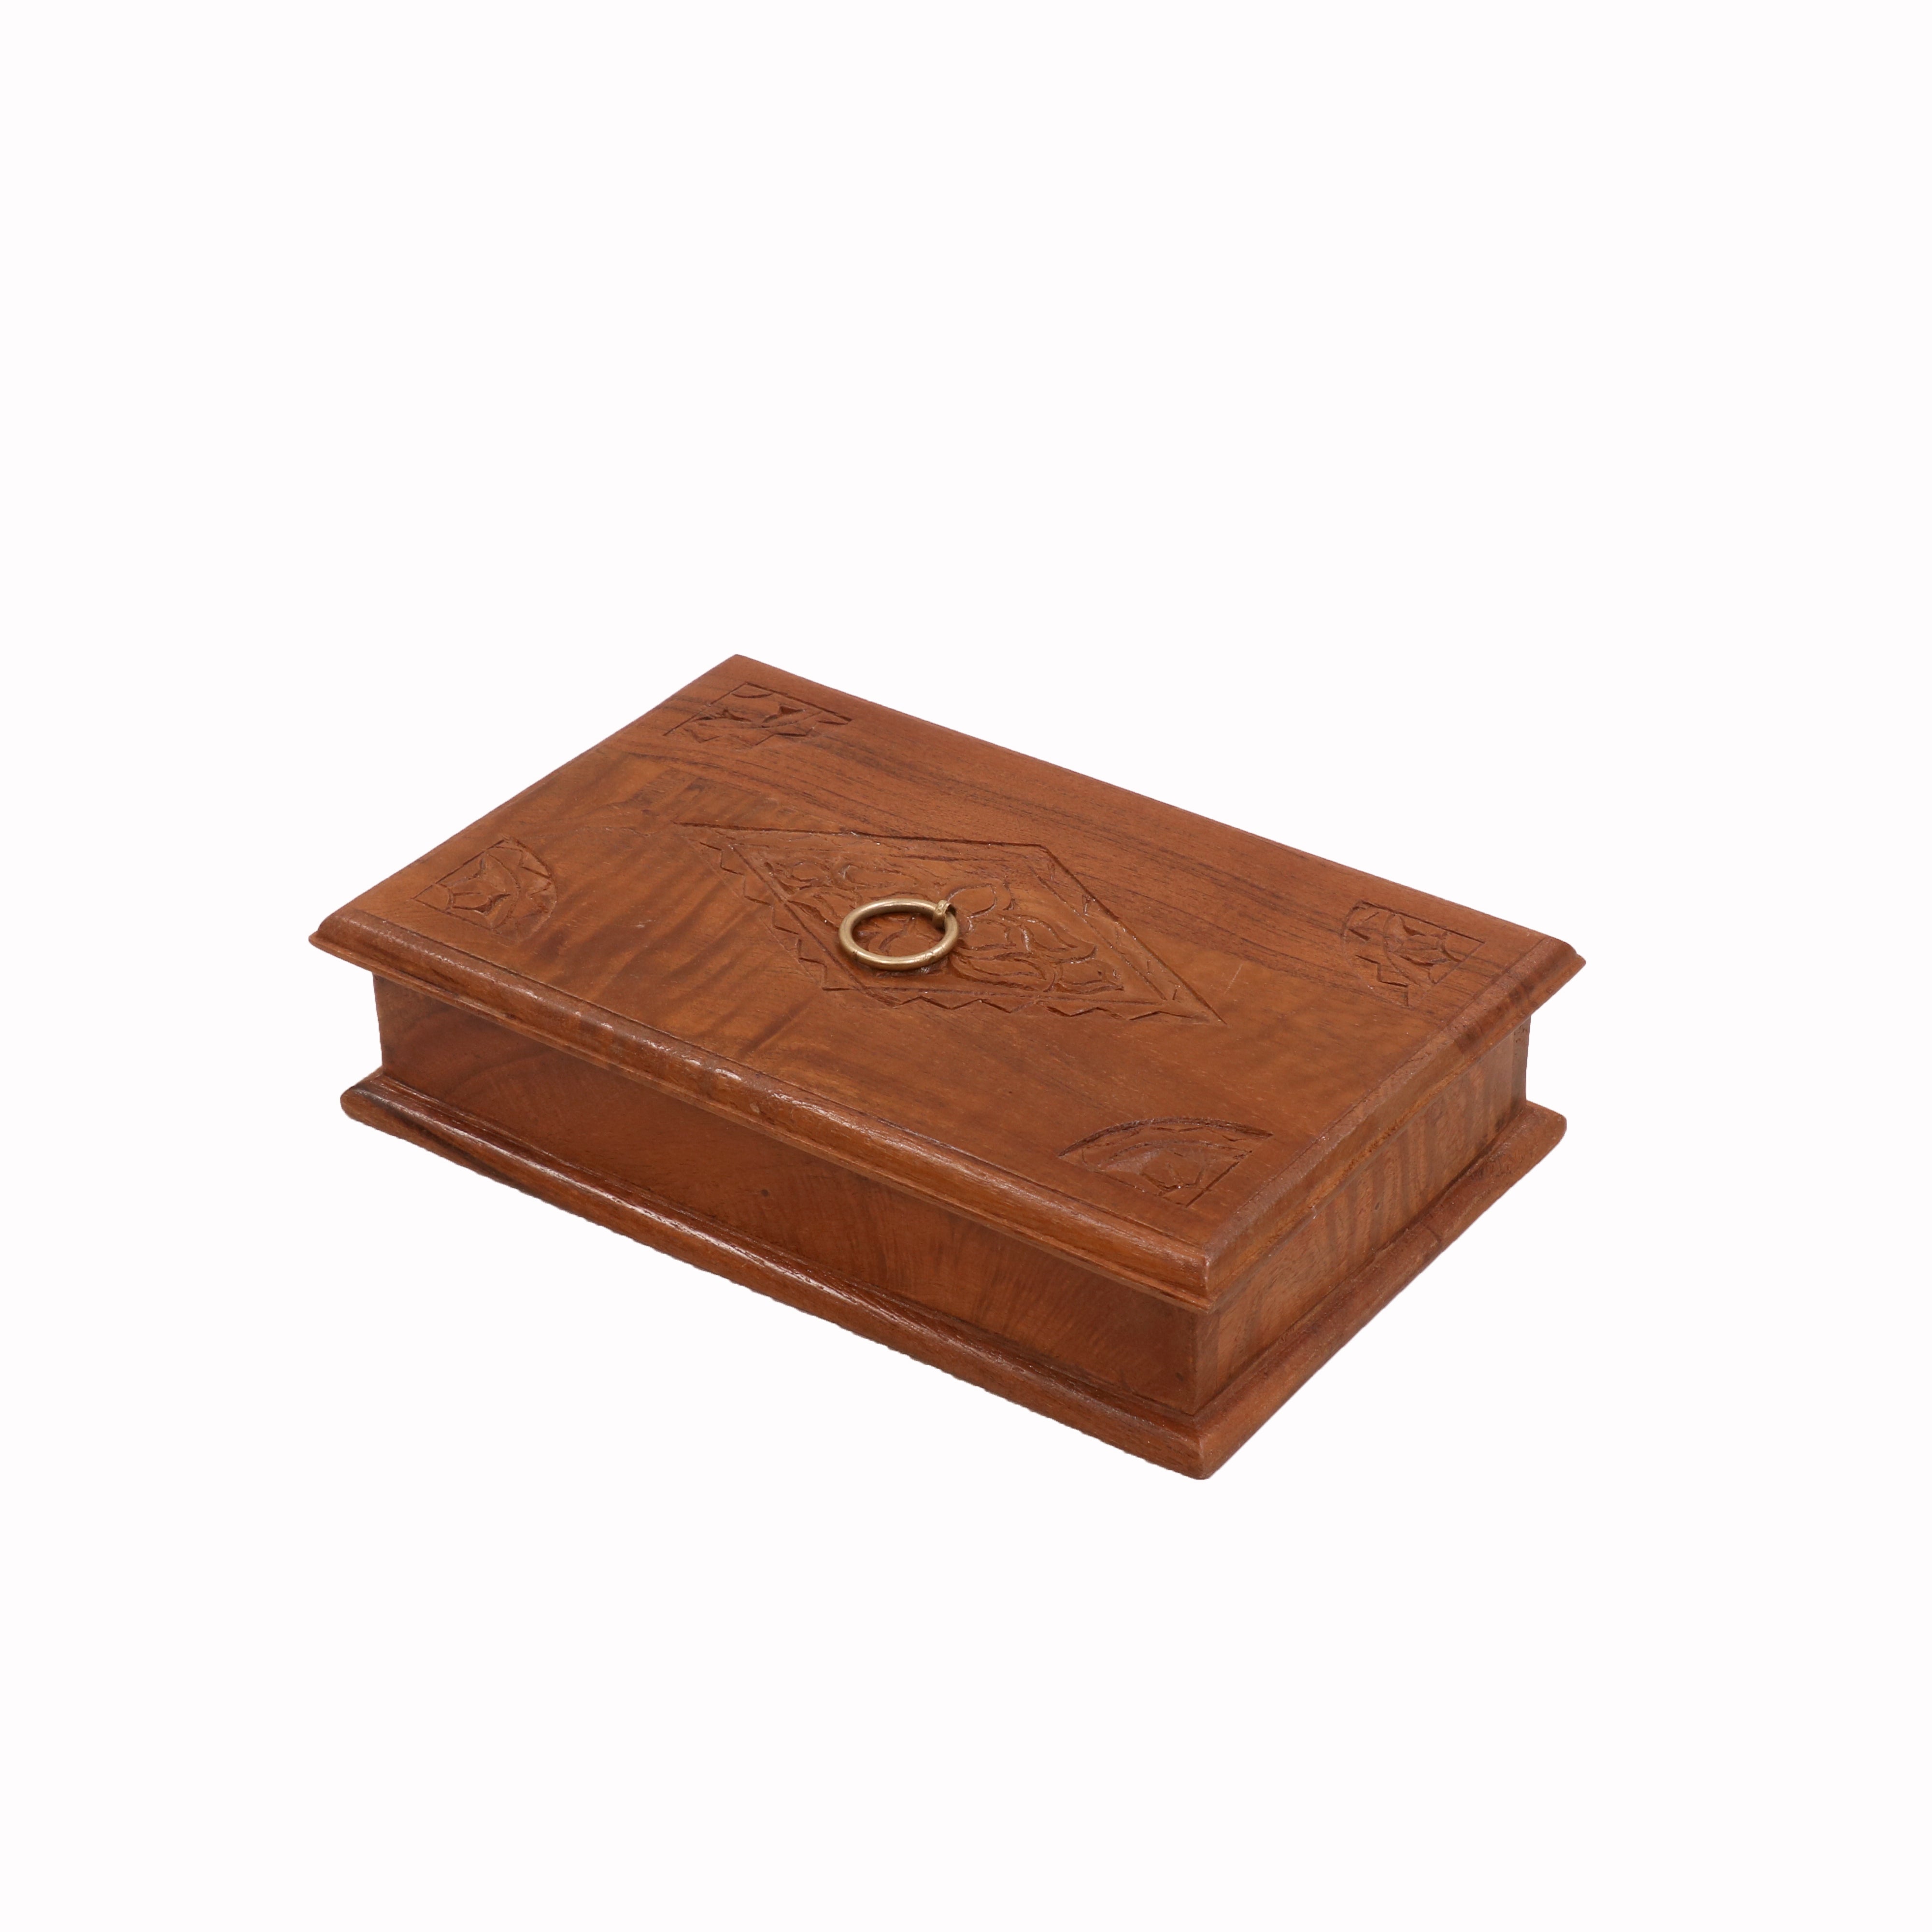 Diamond Engraved Wooden Box Wooden Box